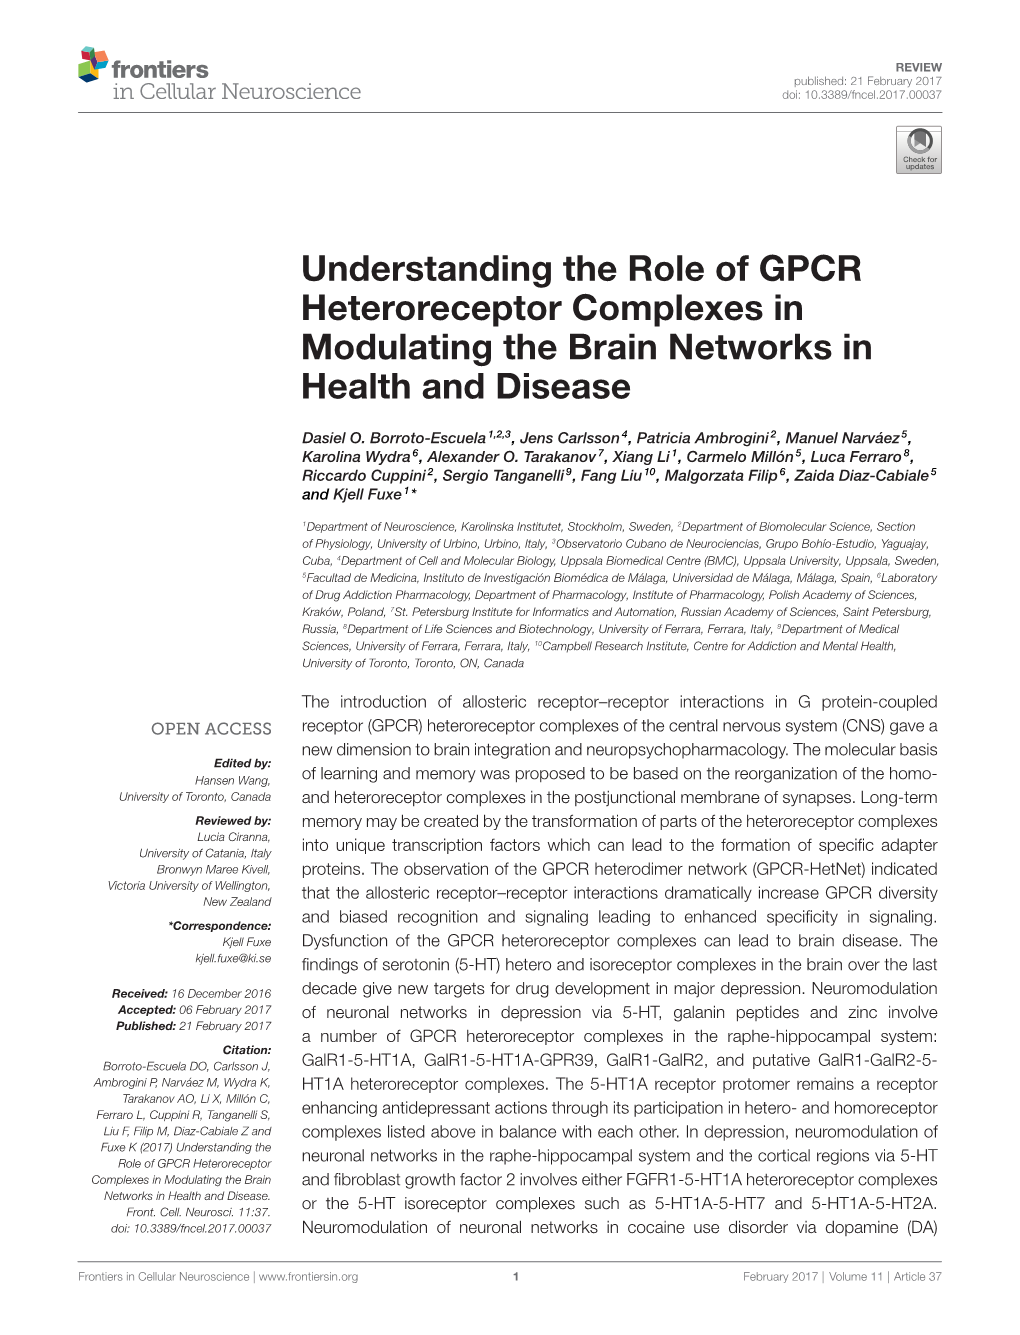 Understanding the Role of GPCR Heteroreceptor Complexes in Modulating the Brain Networks in Health and Disease